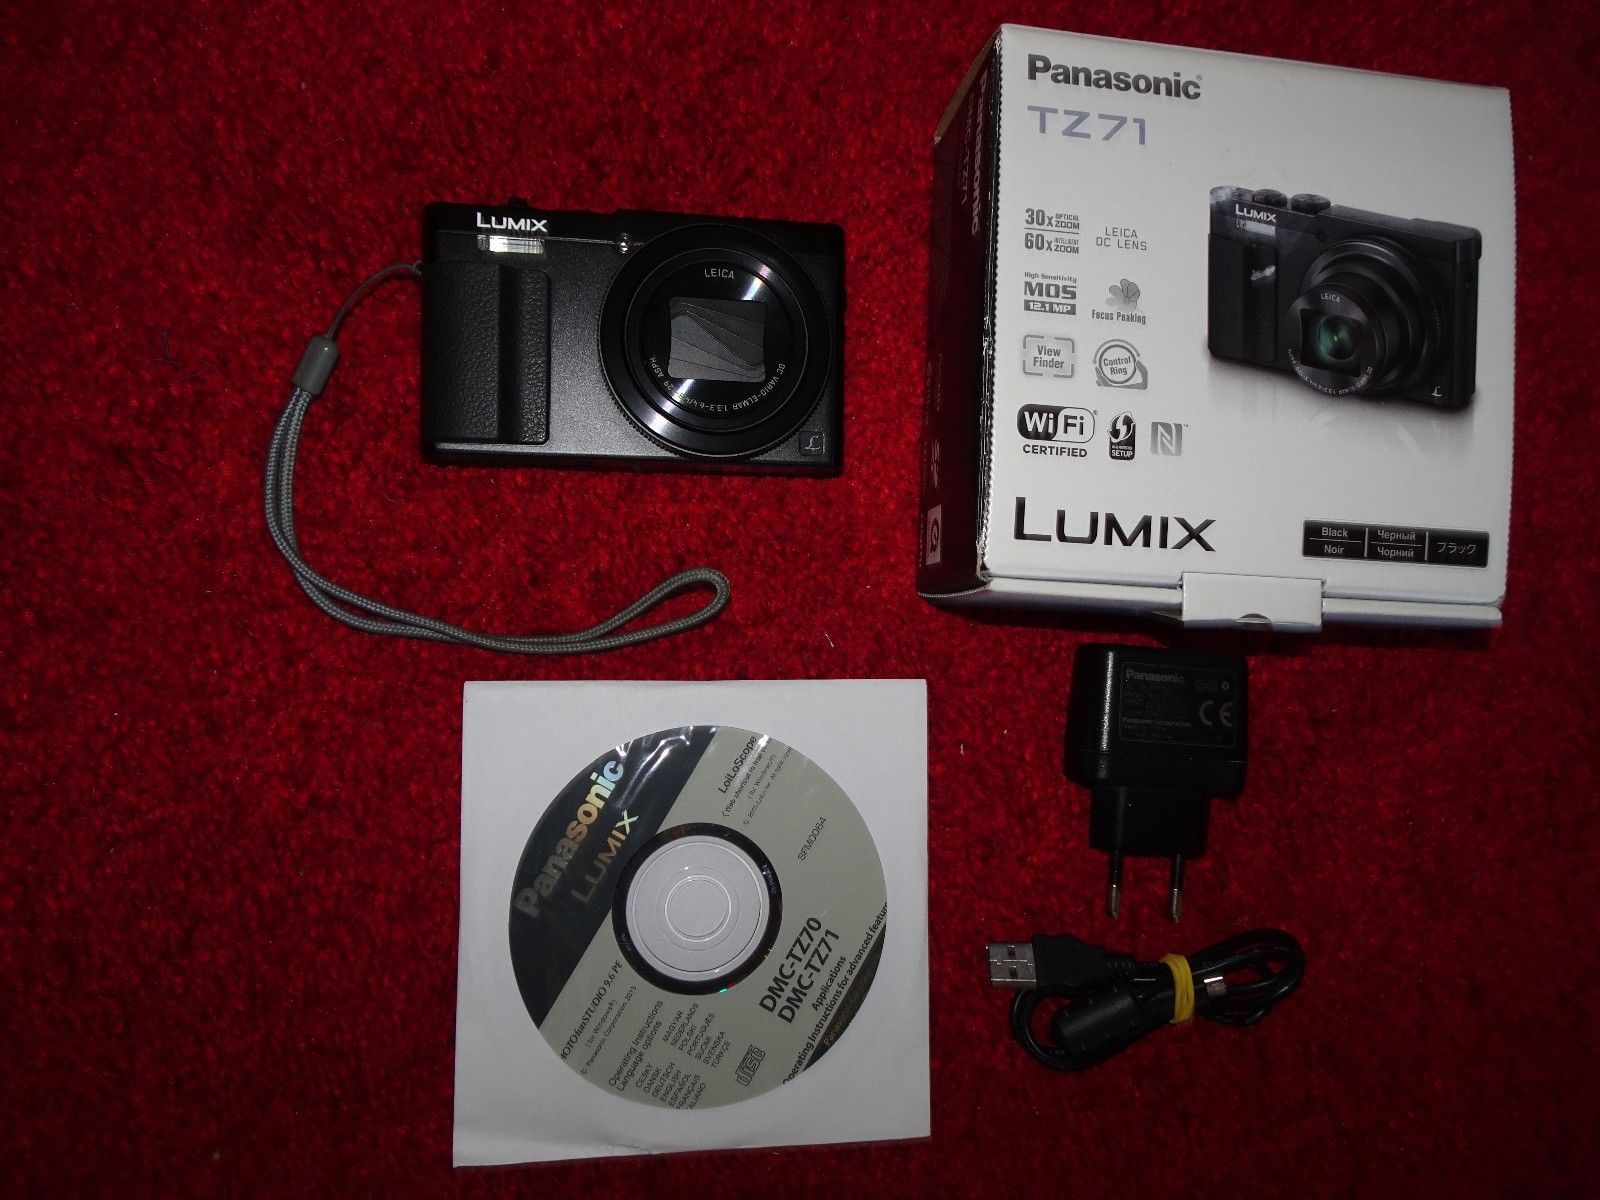 Panasonic LUMIX DMC-TZ71 12.1 MP Digitalkamera - Schwarz